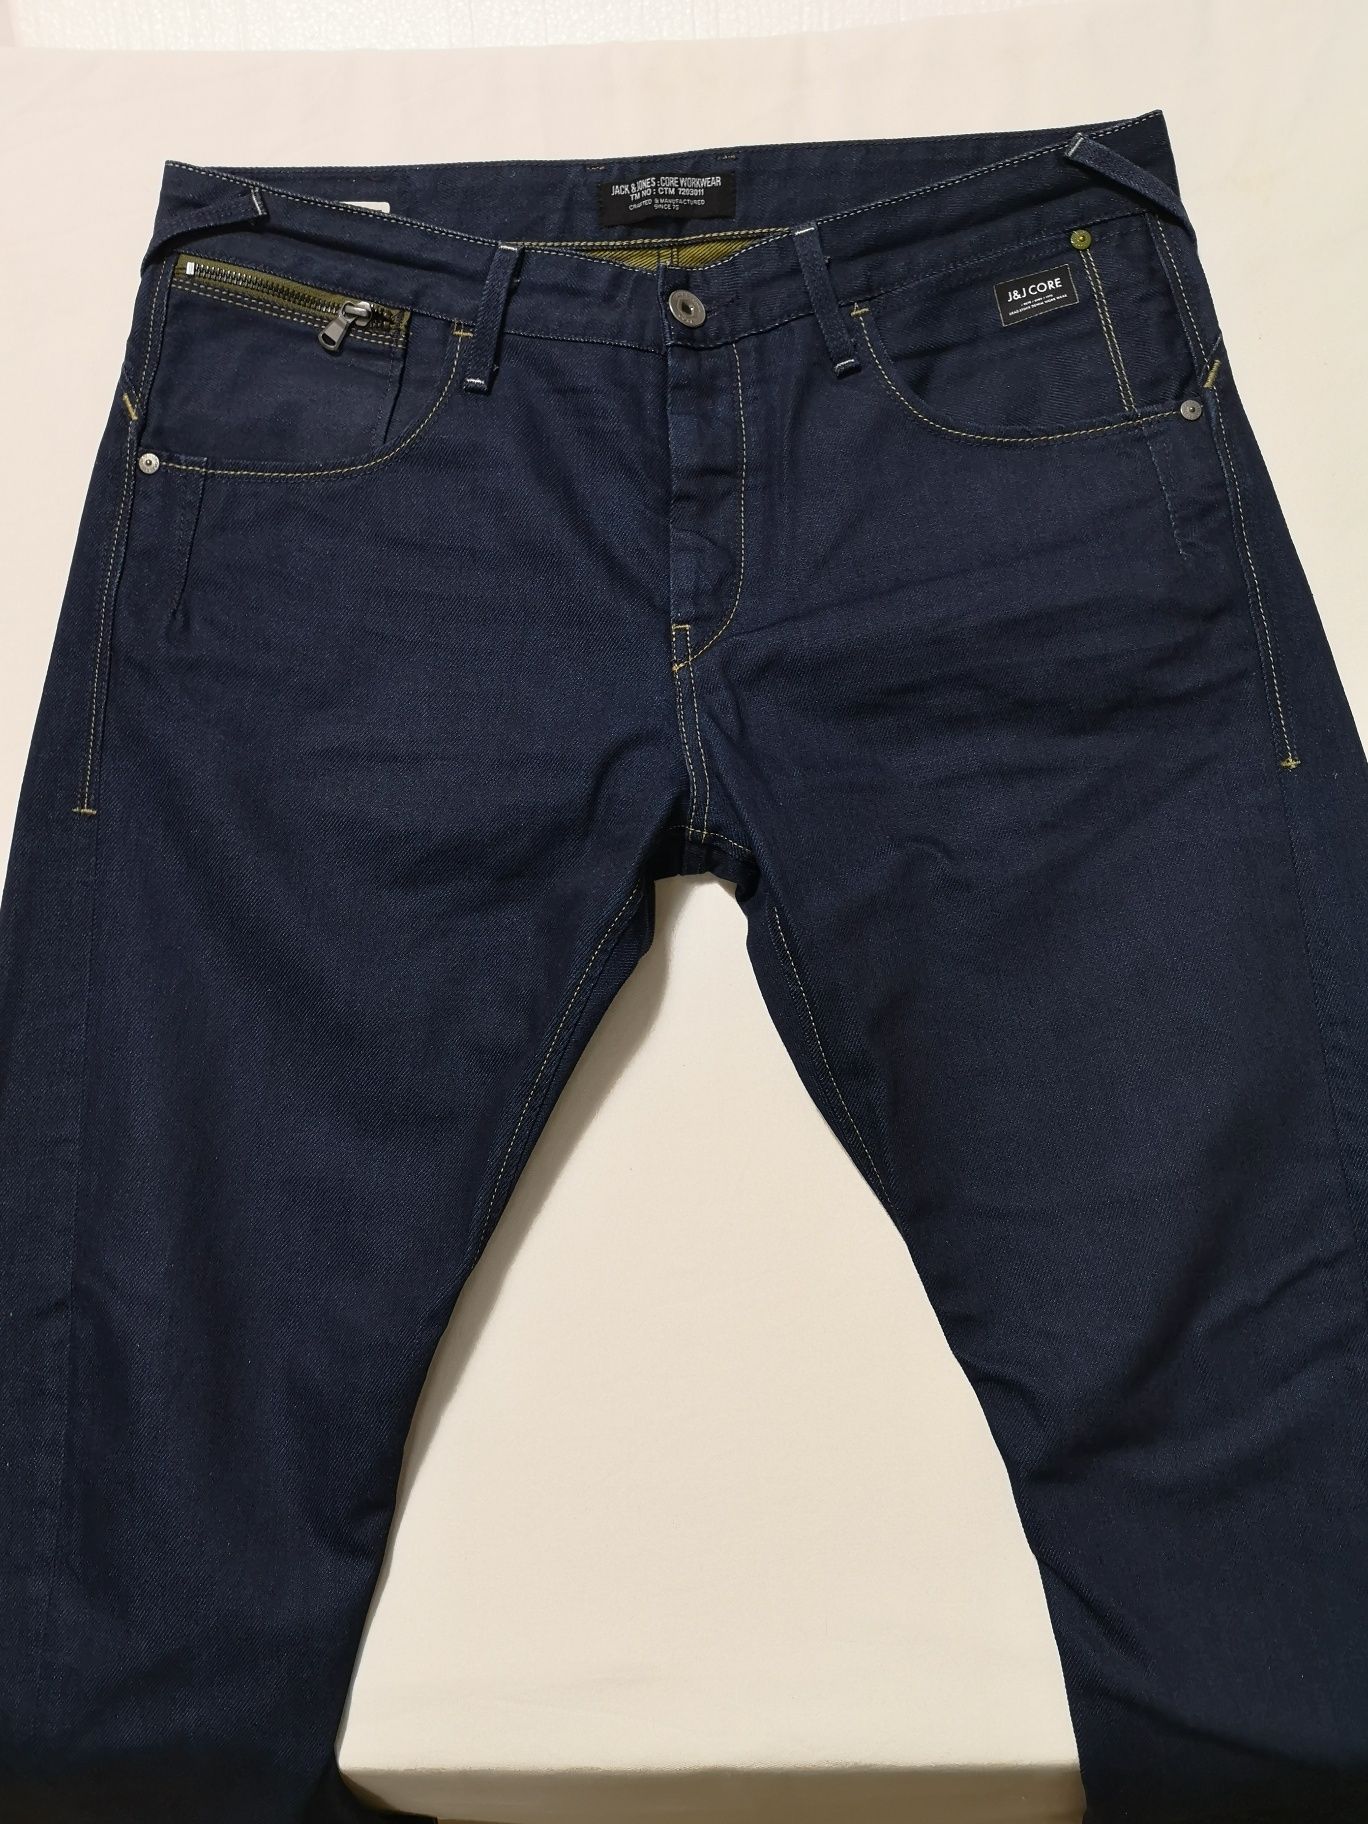 J&J Core jeans W 36